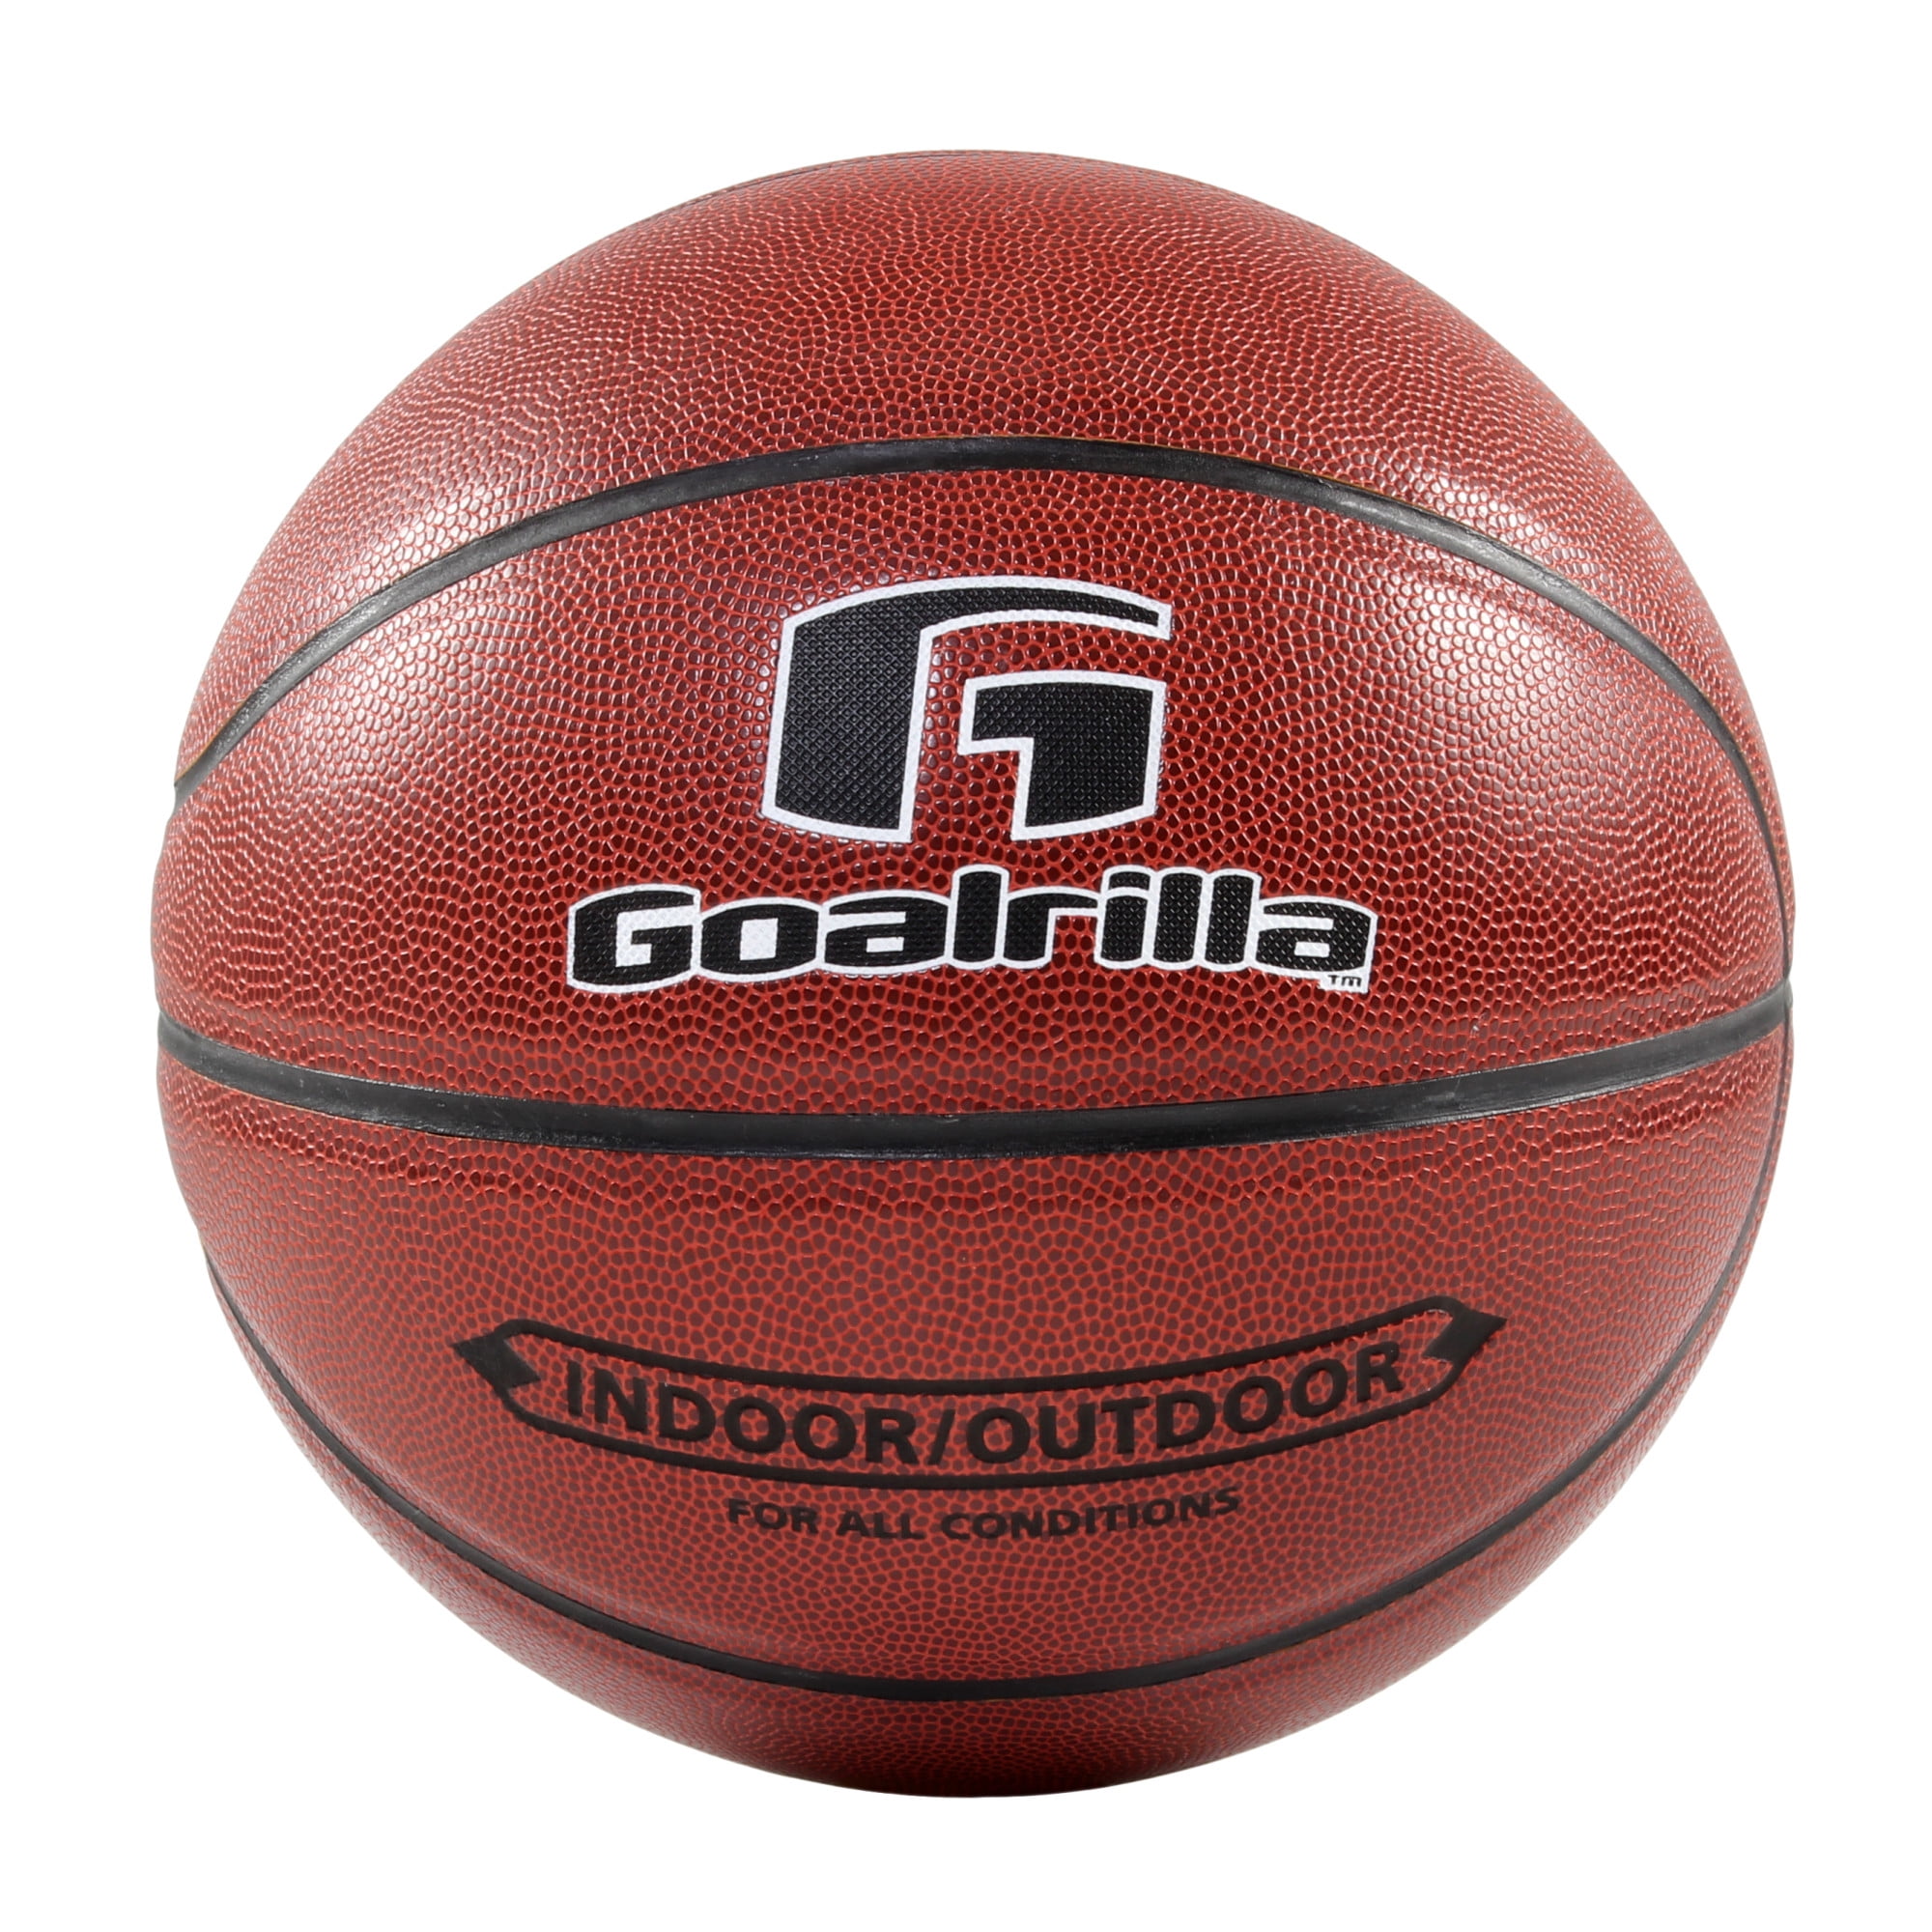 MacGregor Indoor Outdoor Official Size 29.5 inch Rubber Basketball for Kids Teen 